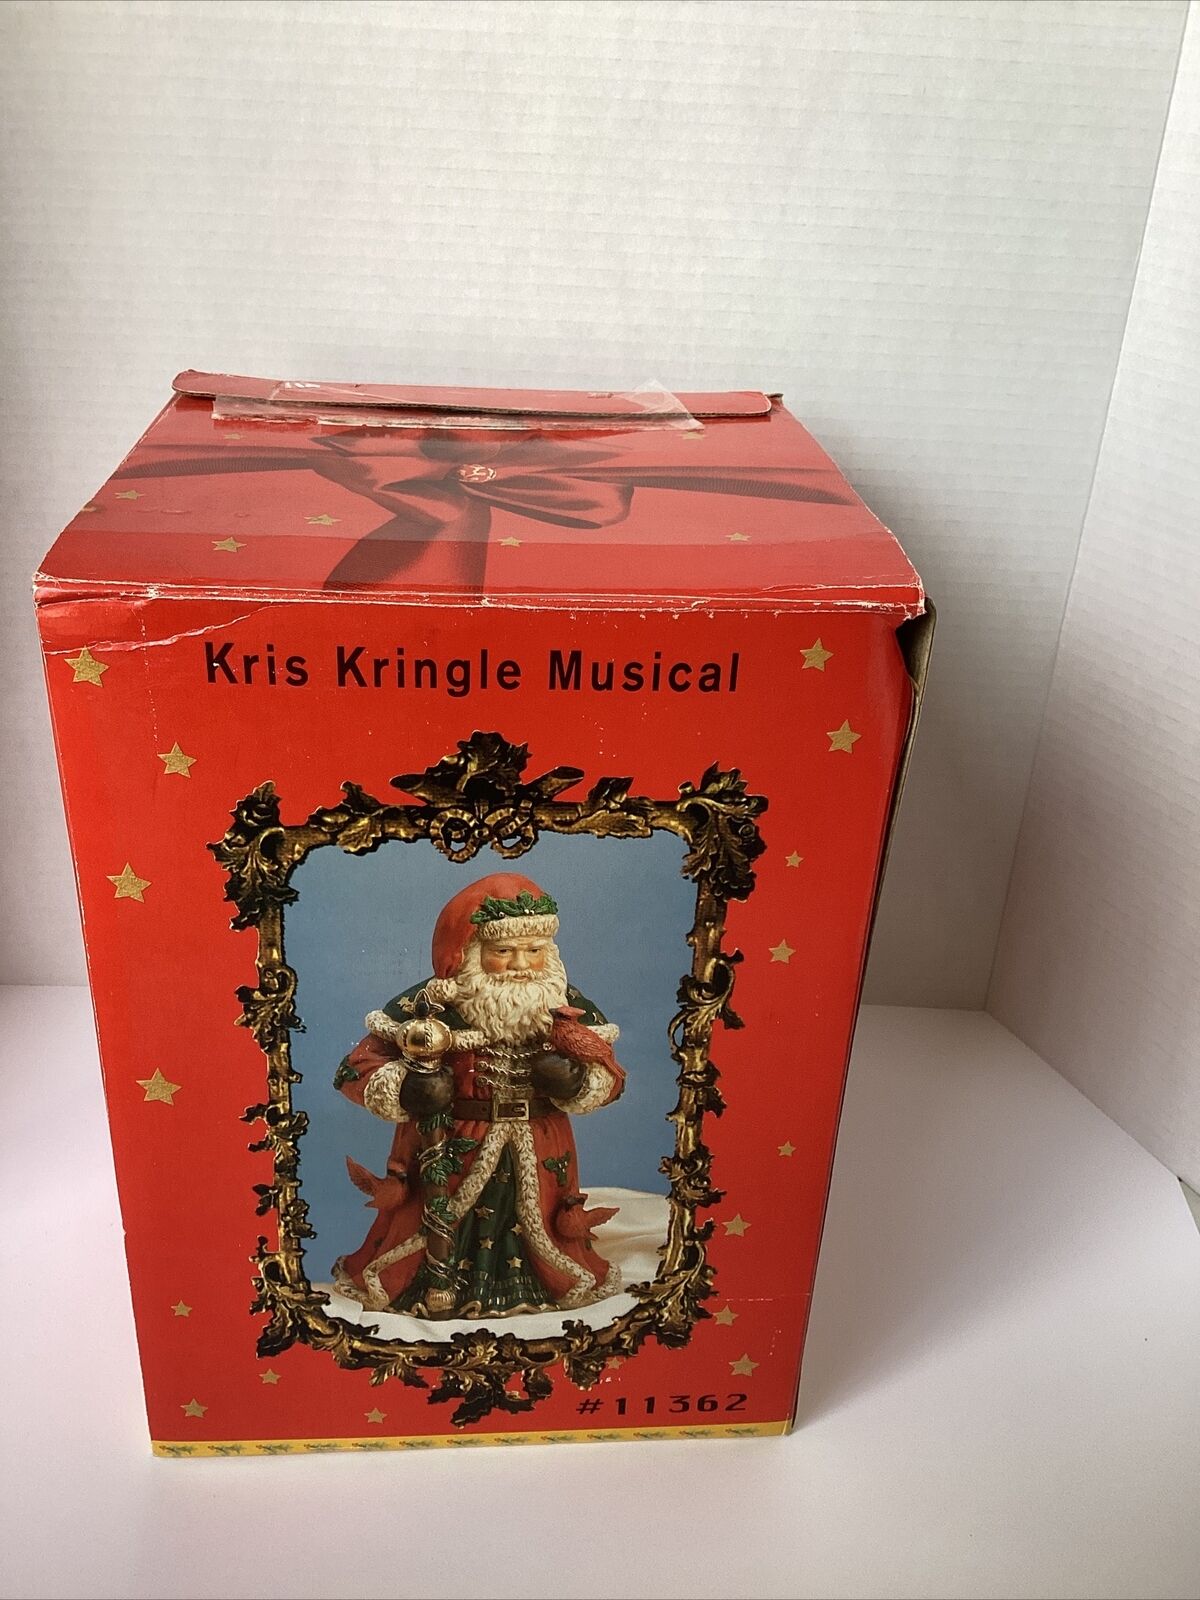 VTG Kris Kringle Musical #11362 Open Box By Abc Distributing Inc